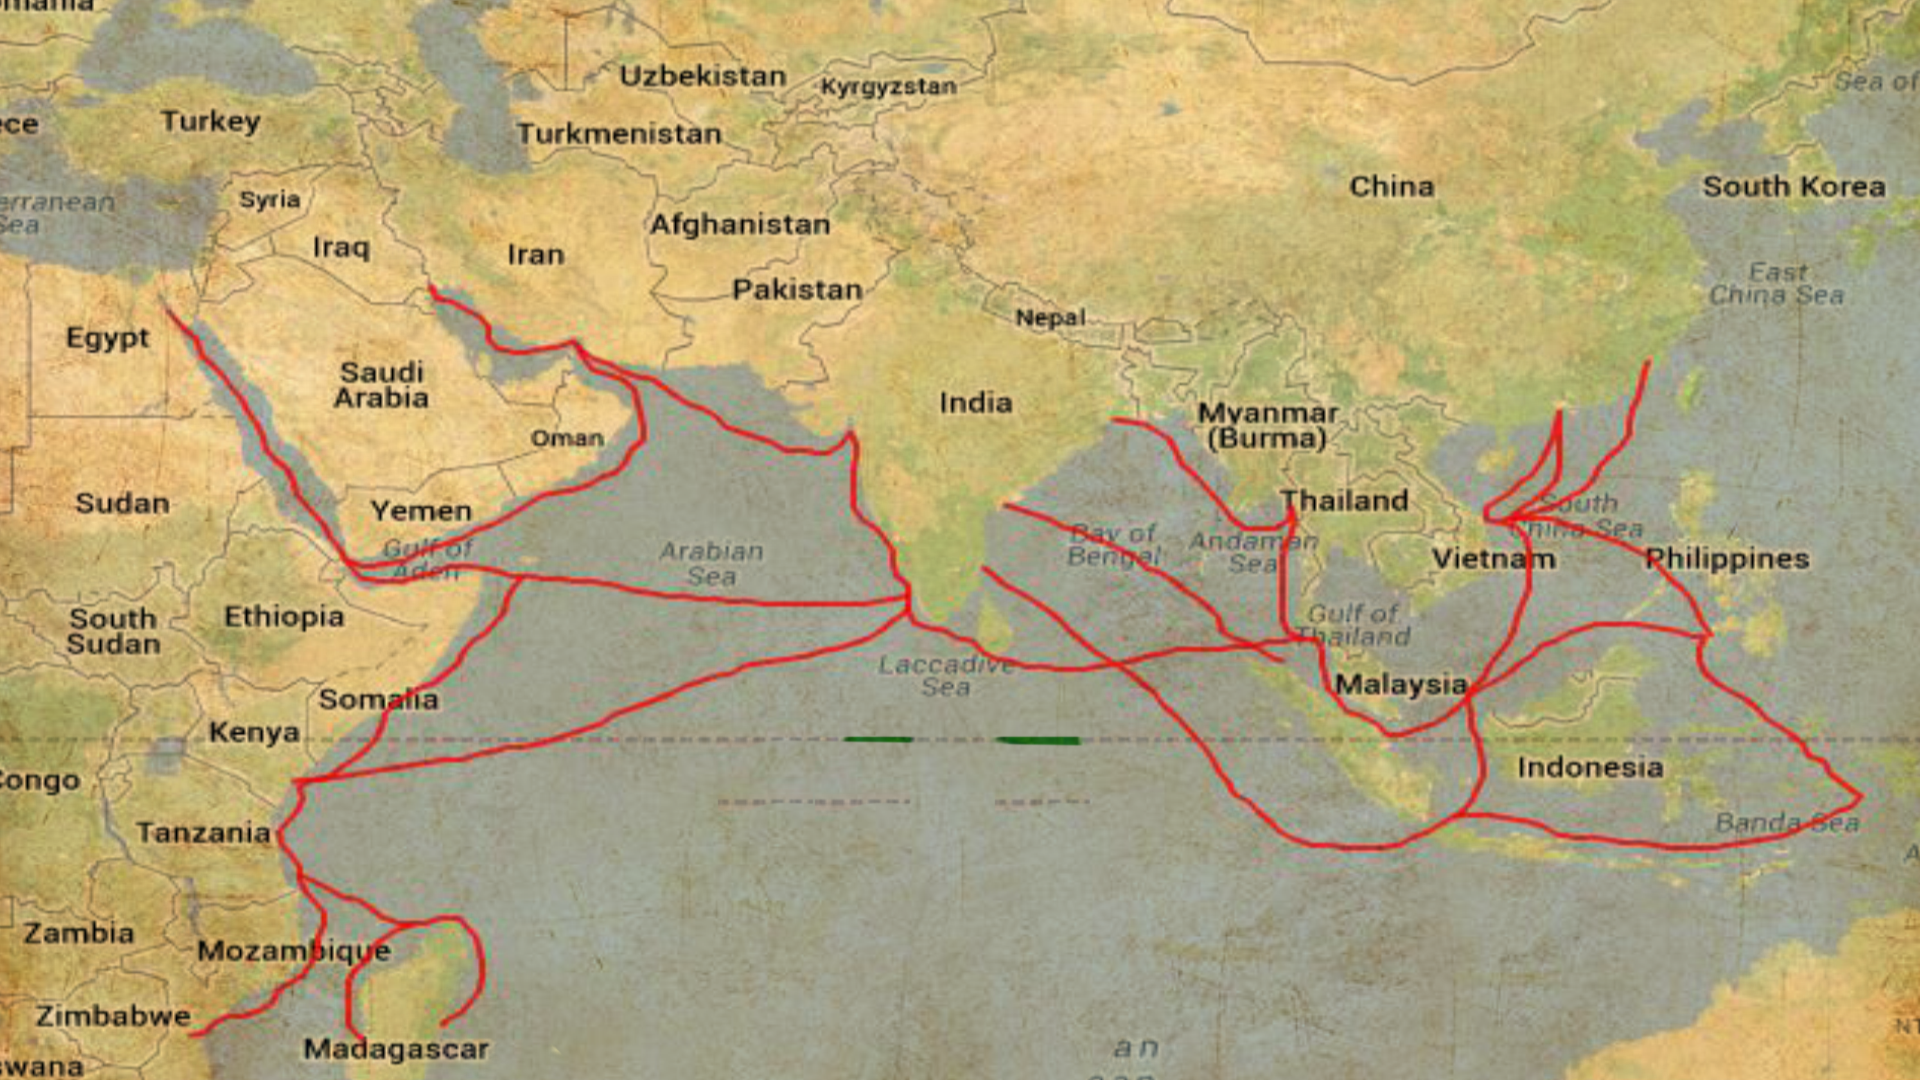 Indian Ocean trade network